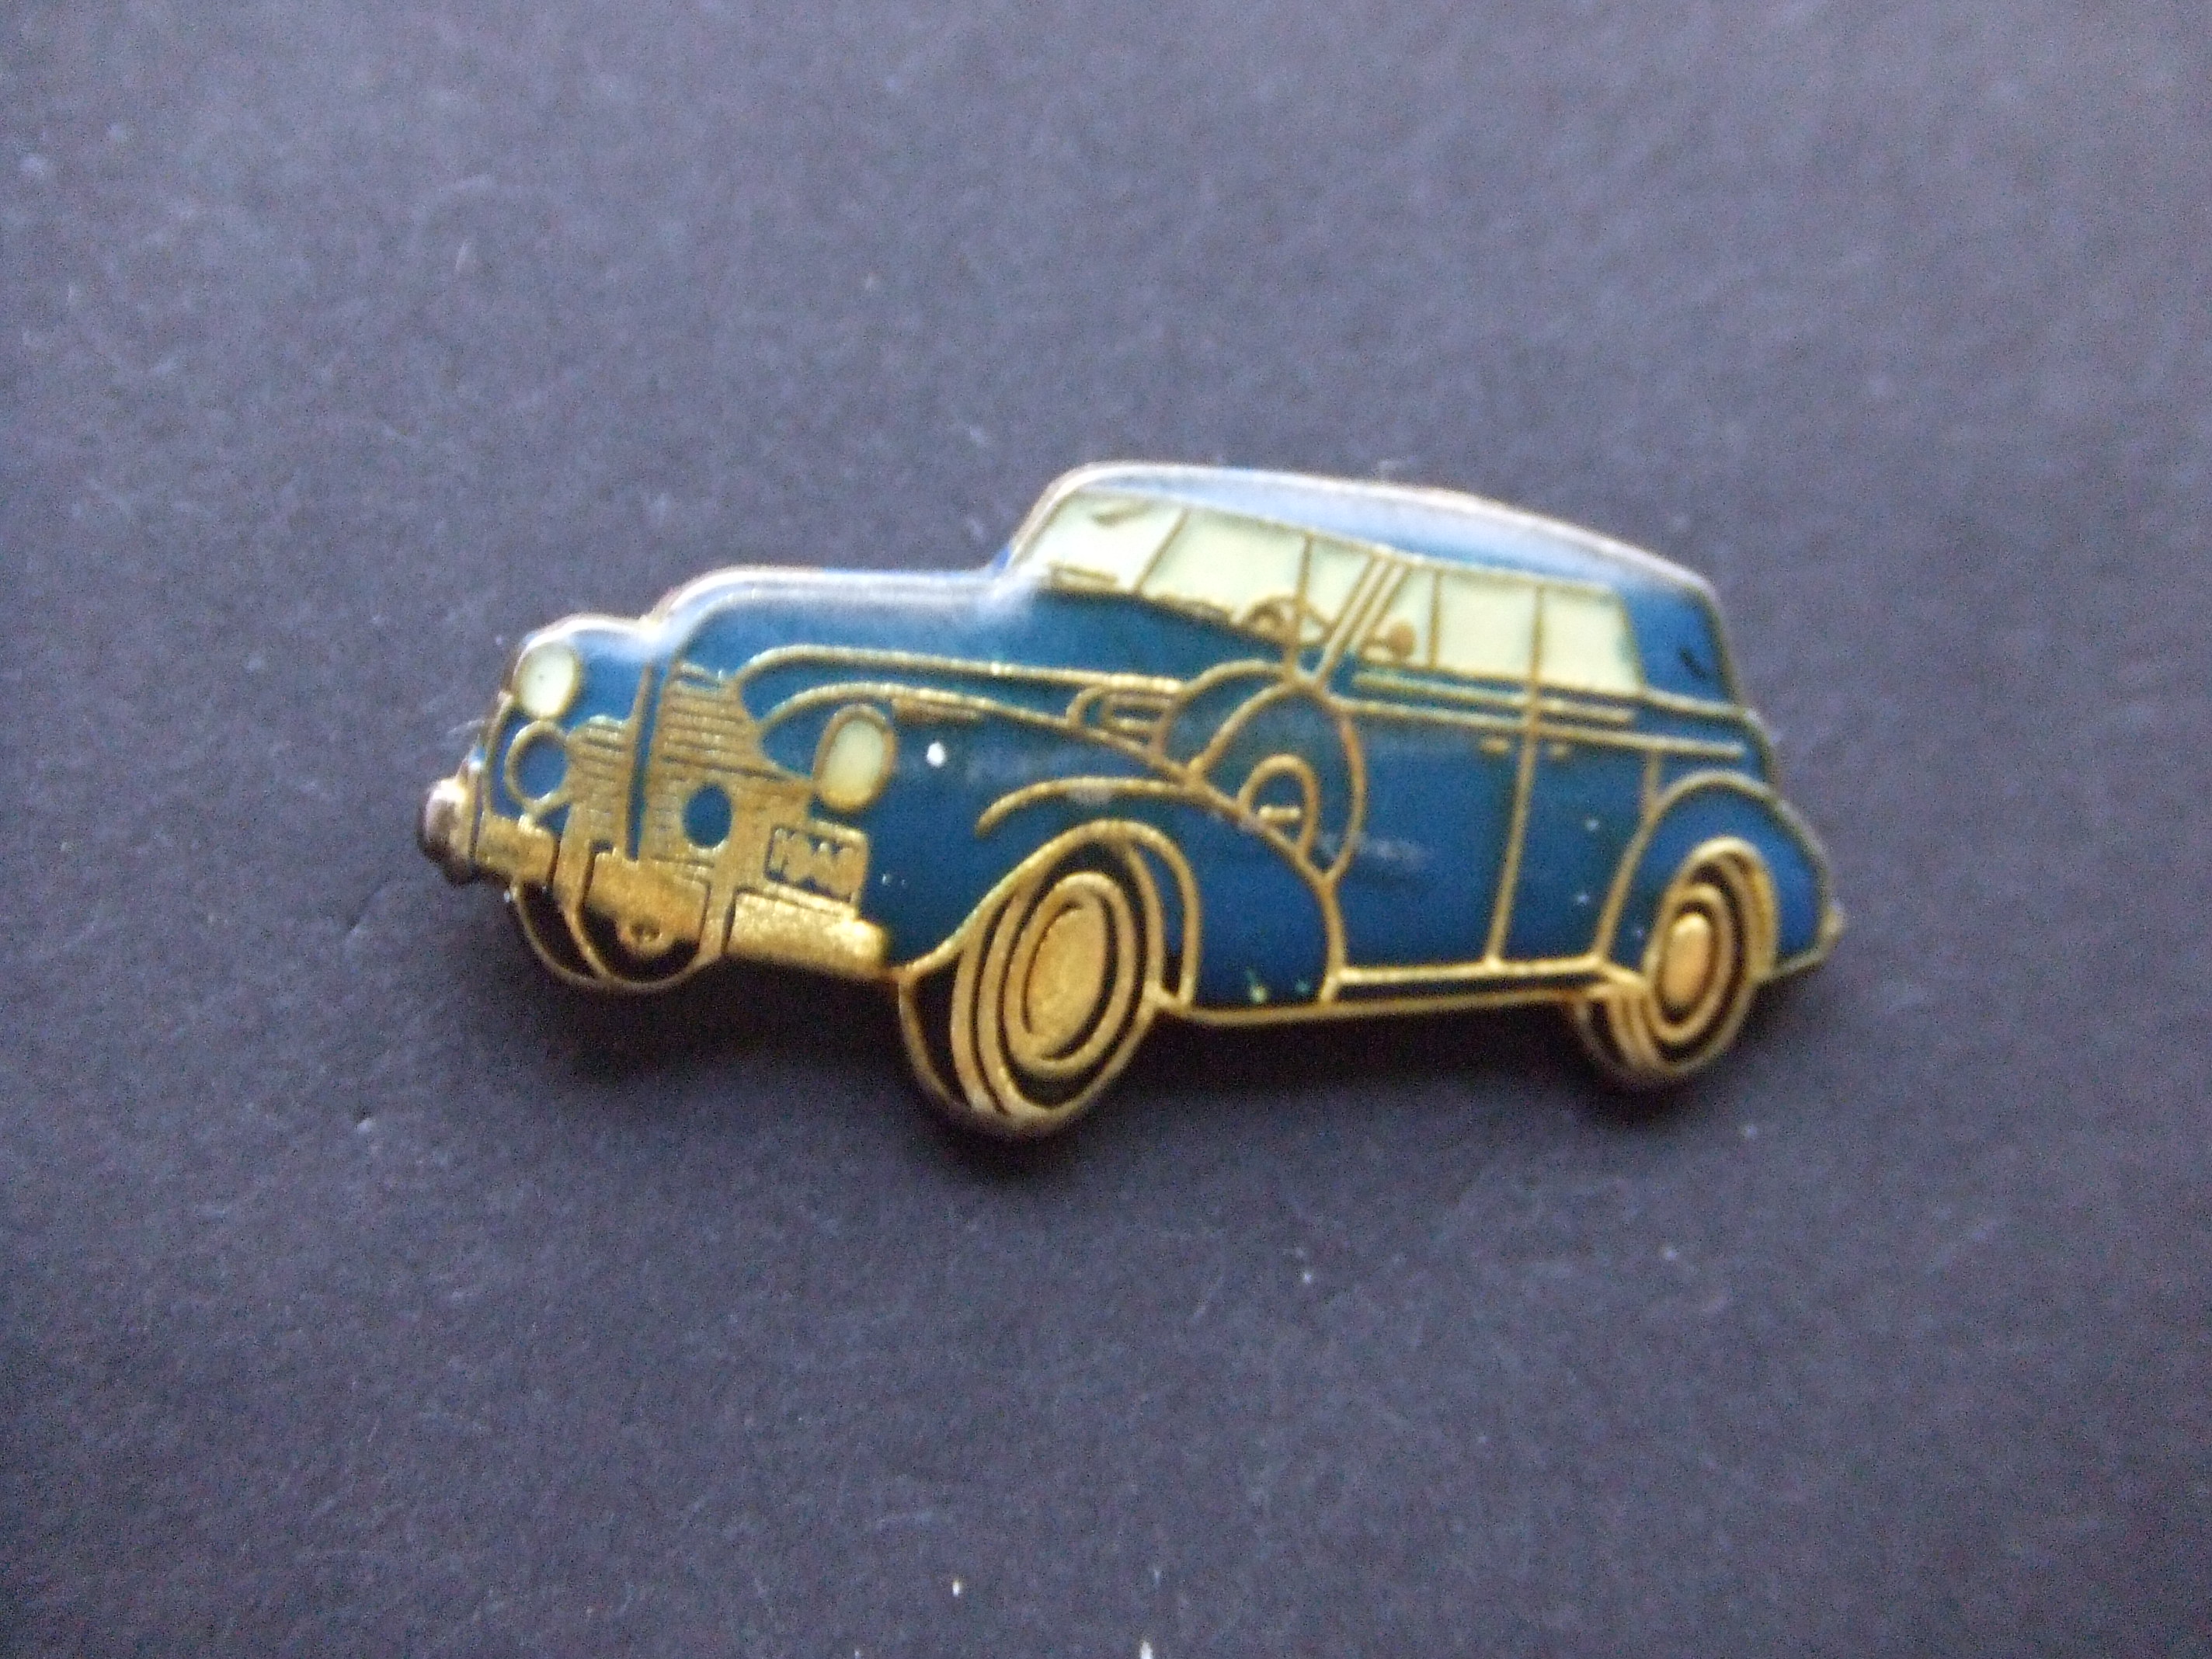 Buick Roadmaster 1939 blauw oldtimer